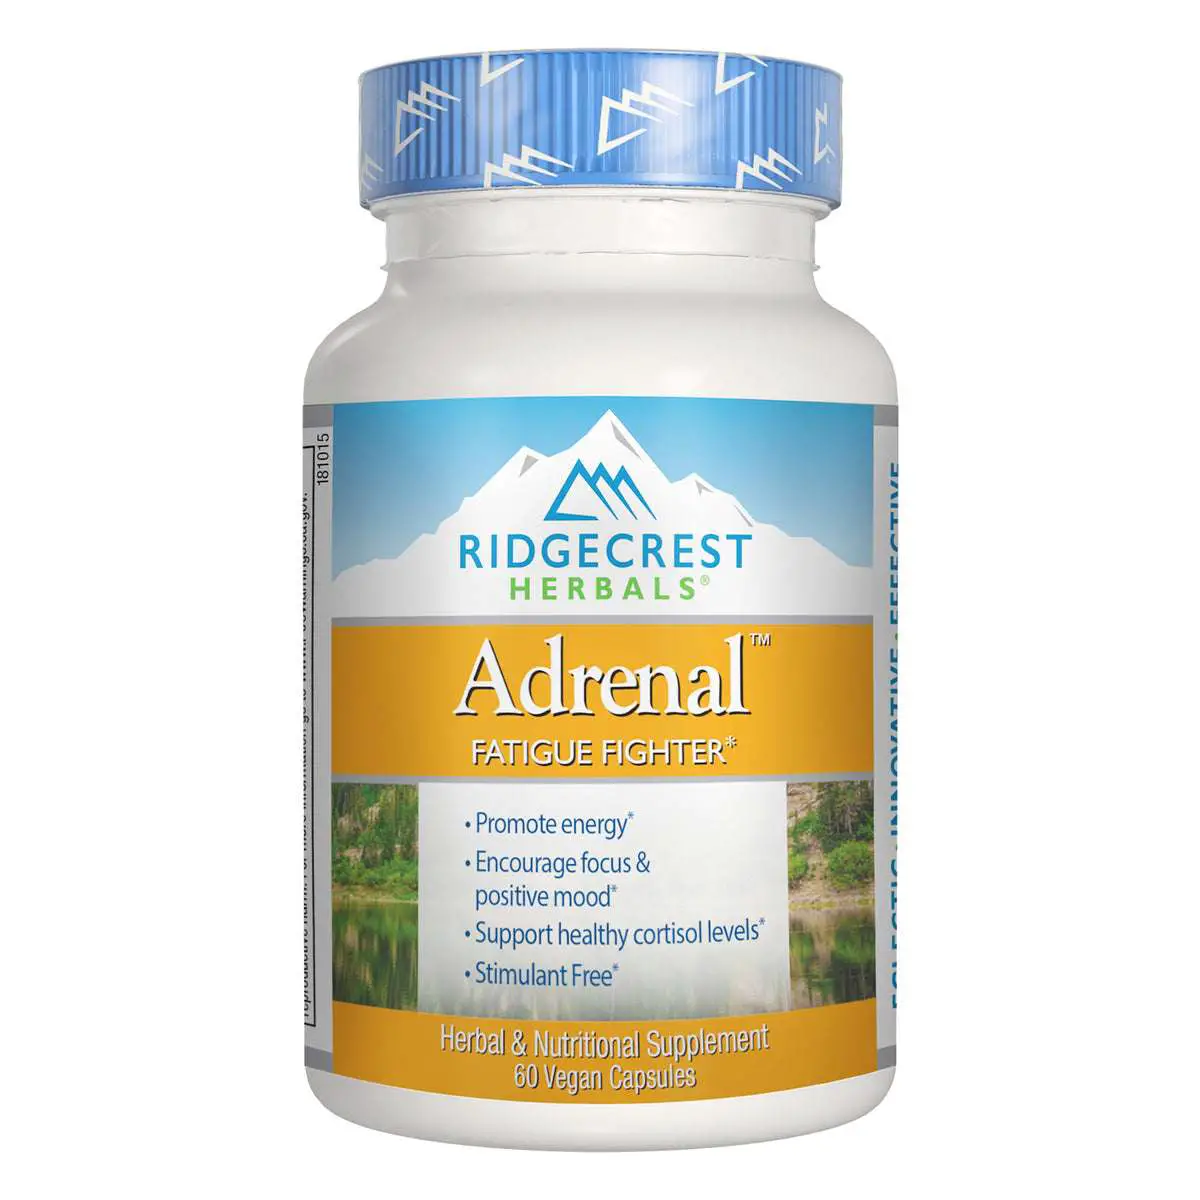 Adrenal Fatigue Fighter by Ridgecrest Herbals